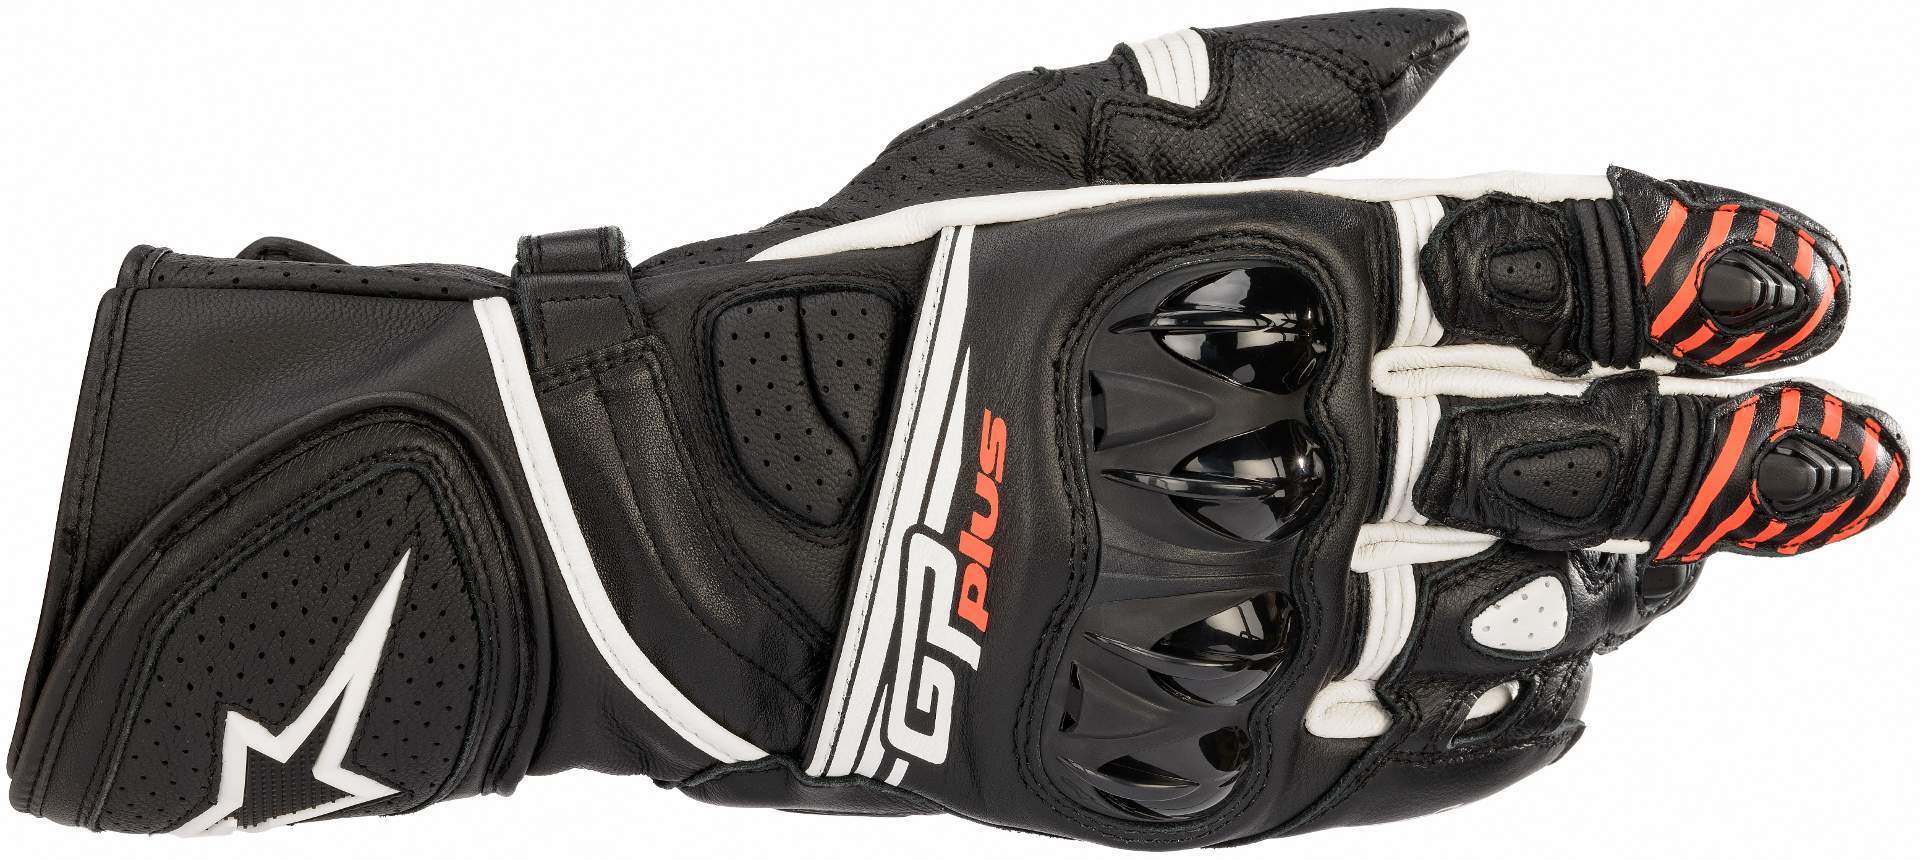 Alpinestars Gp Plus R V2 Motorcycle Gloves  - Black White